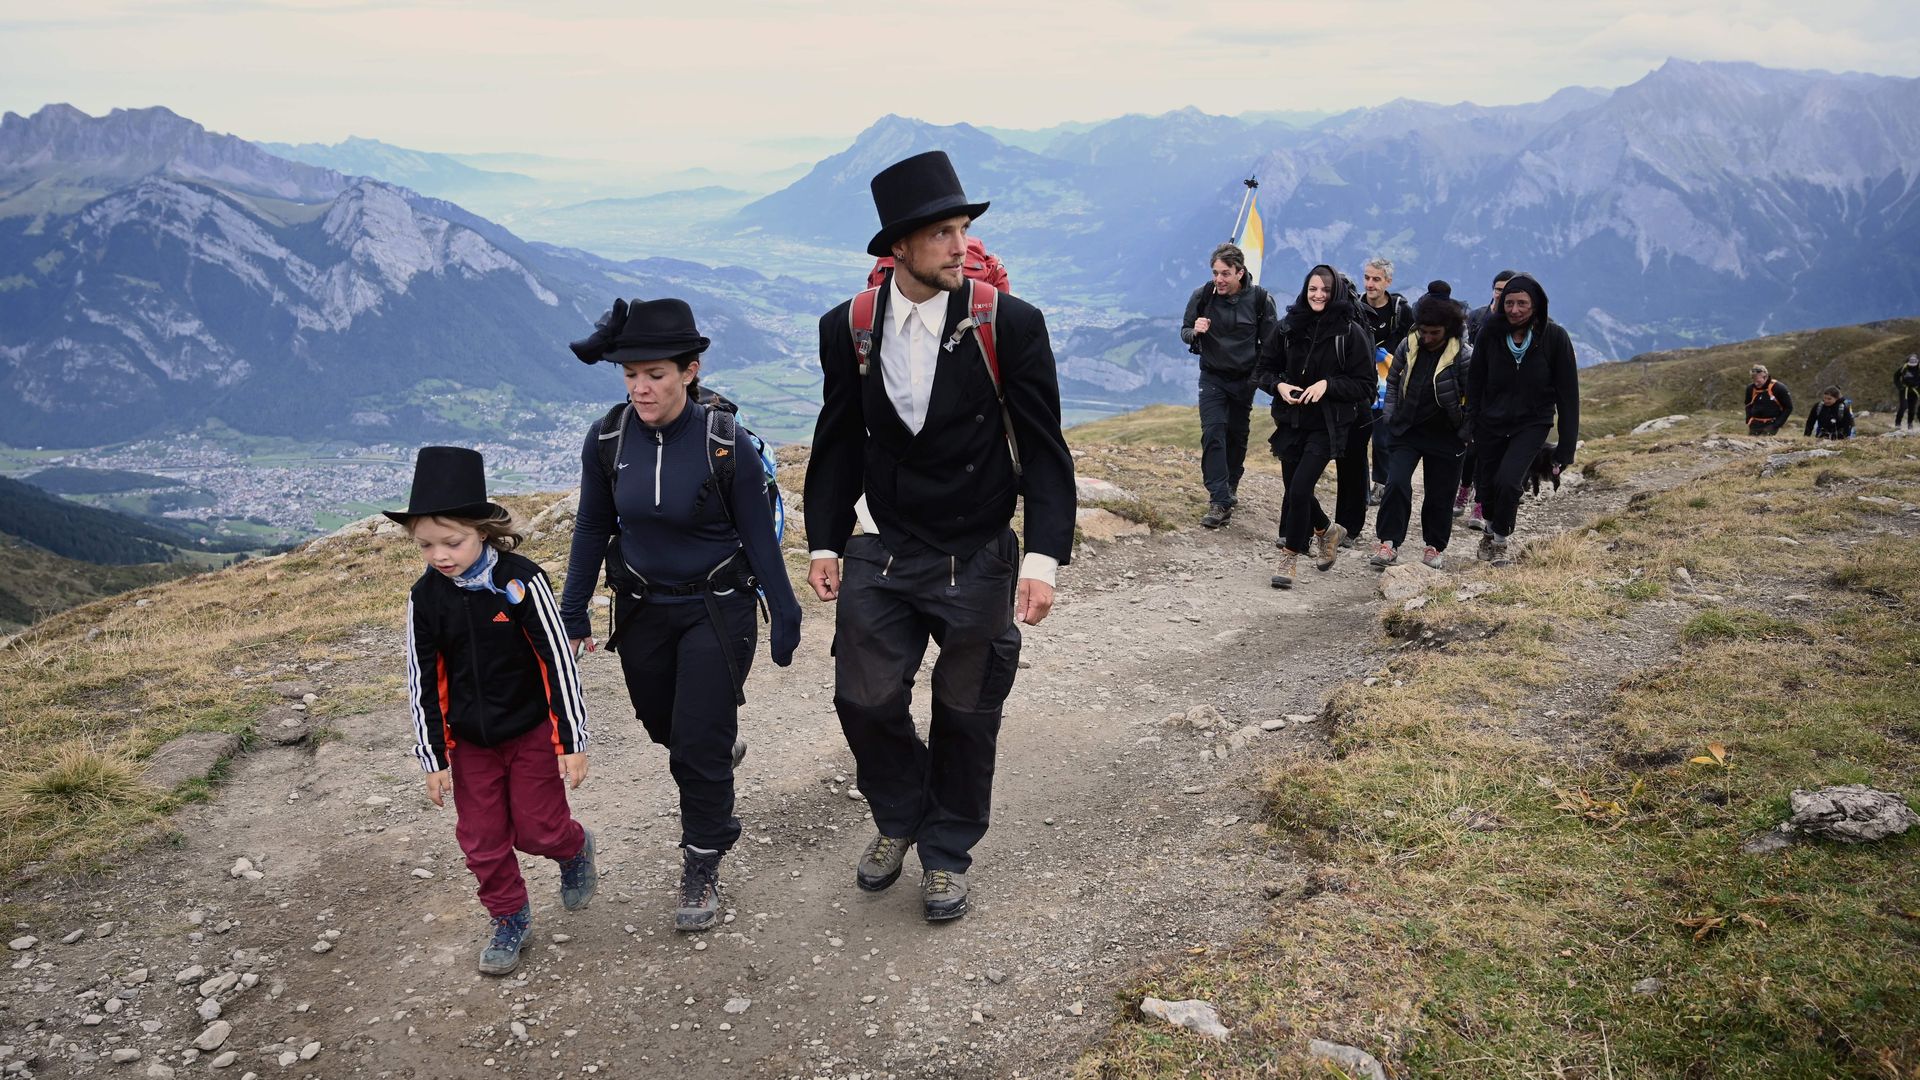 Pizol glacier funeral held in Swiss Alps — in photos - Axios